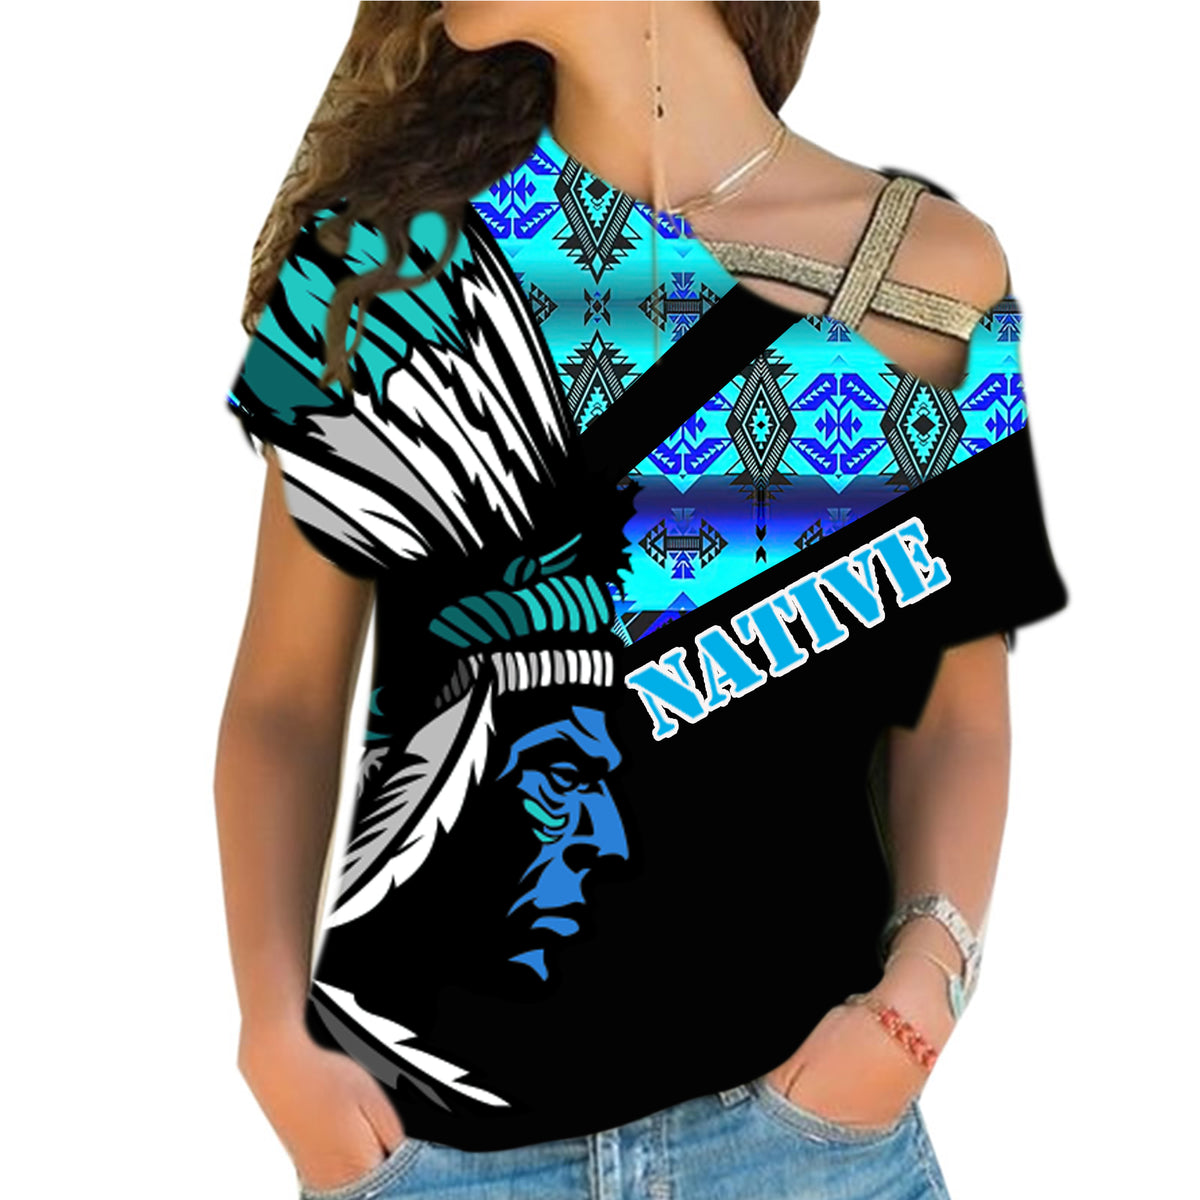 Powwow StoreCRS0001227 Native American Cross Shoulder Shirt